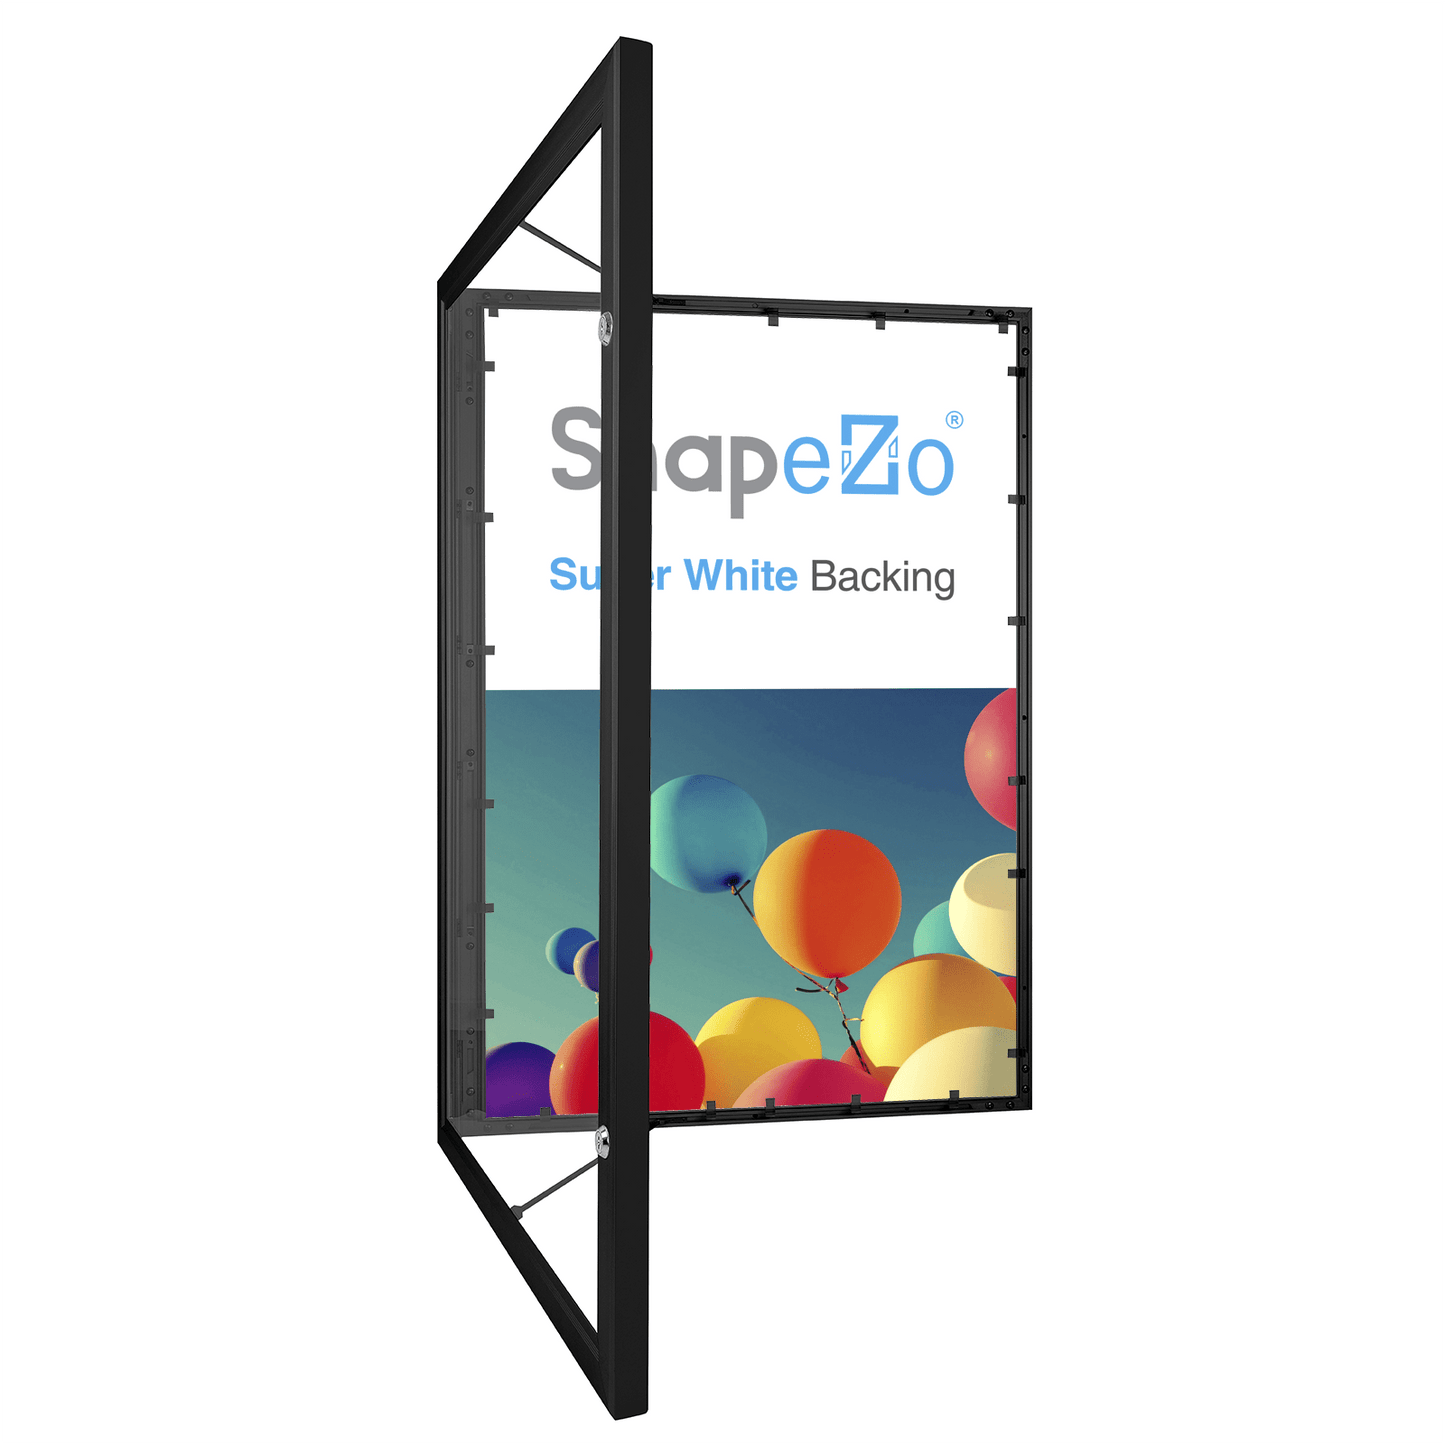 24x36 Black SnapeZo® Poster Case - 1.77" Profile - Snap Frames Direct